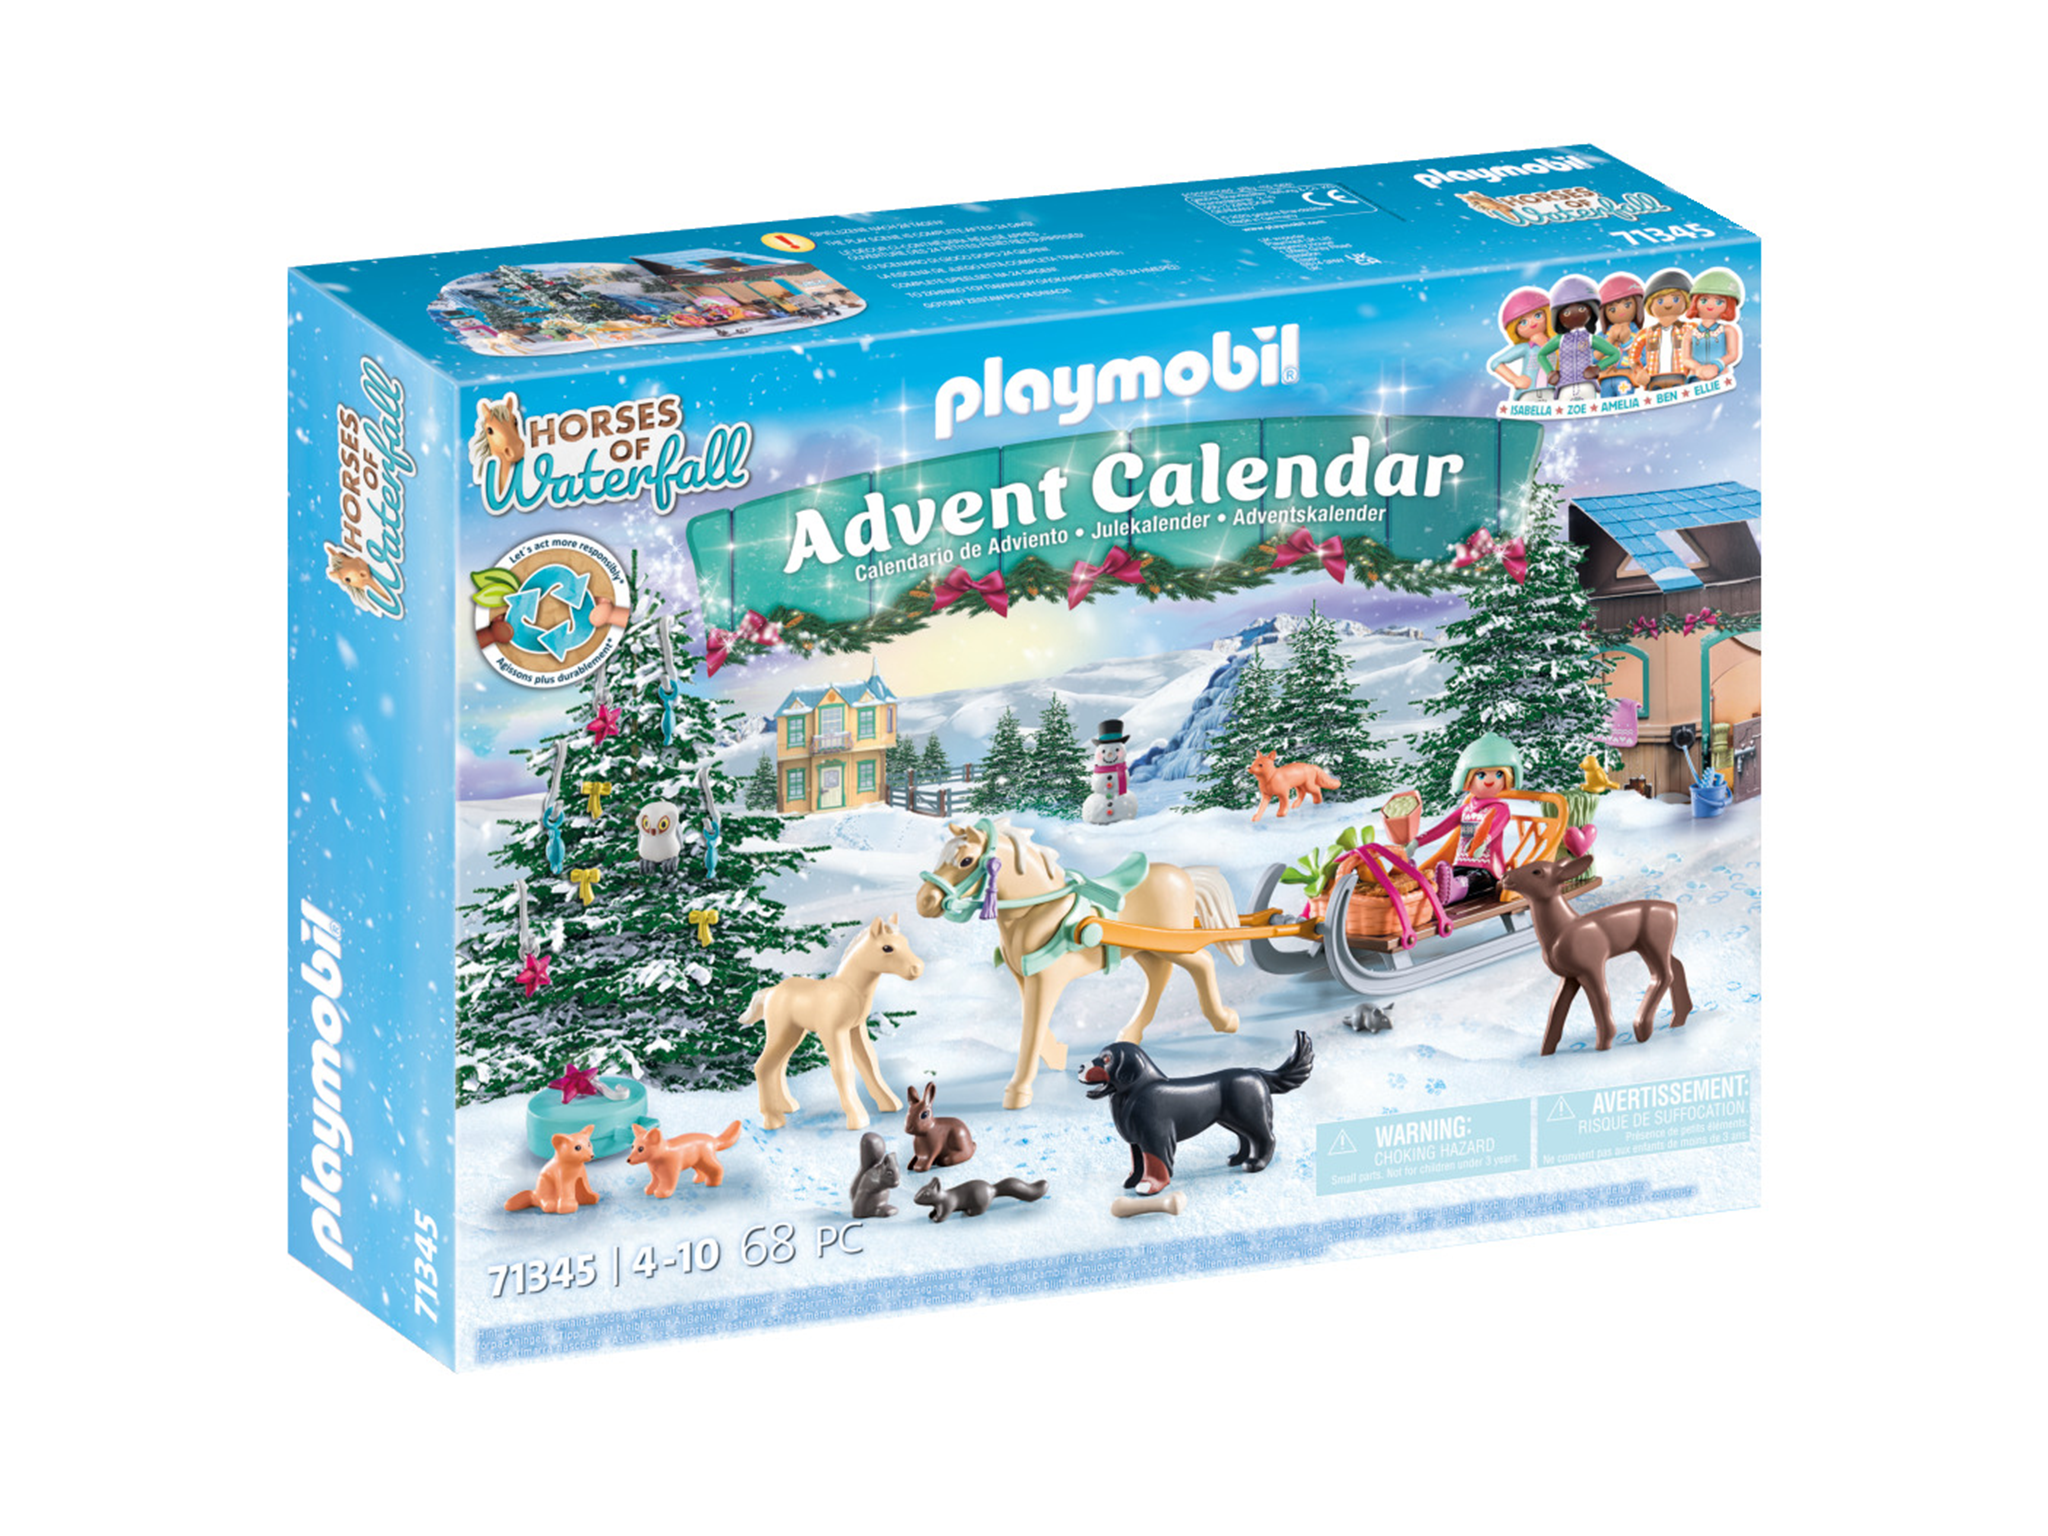 Playmobil horses of waterfall Christmas sleigh ride advent calendar